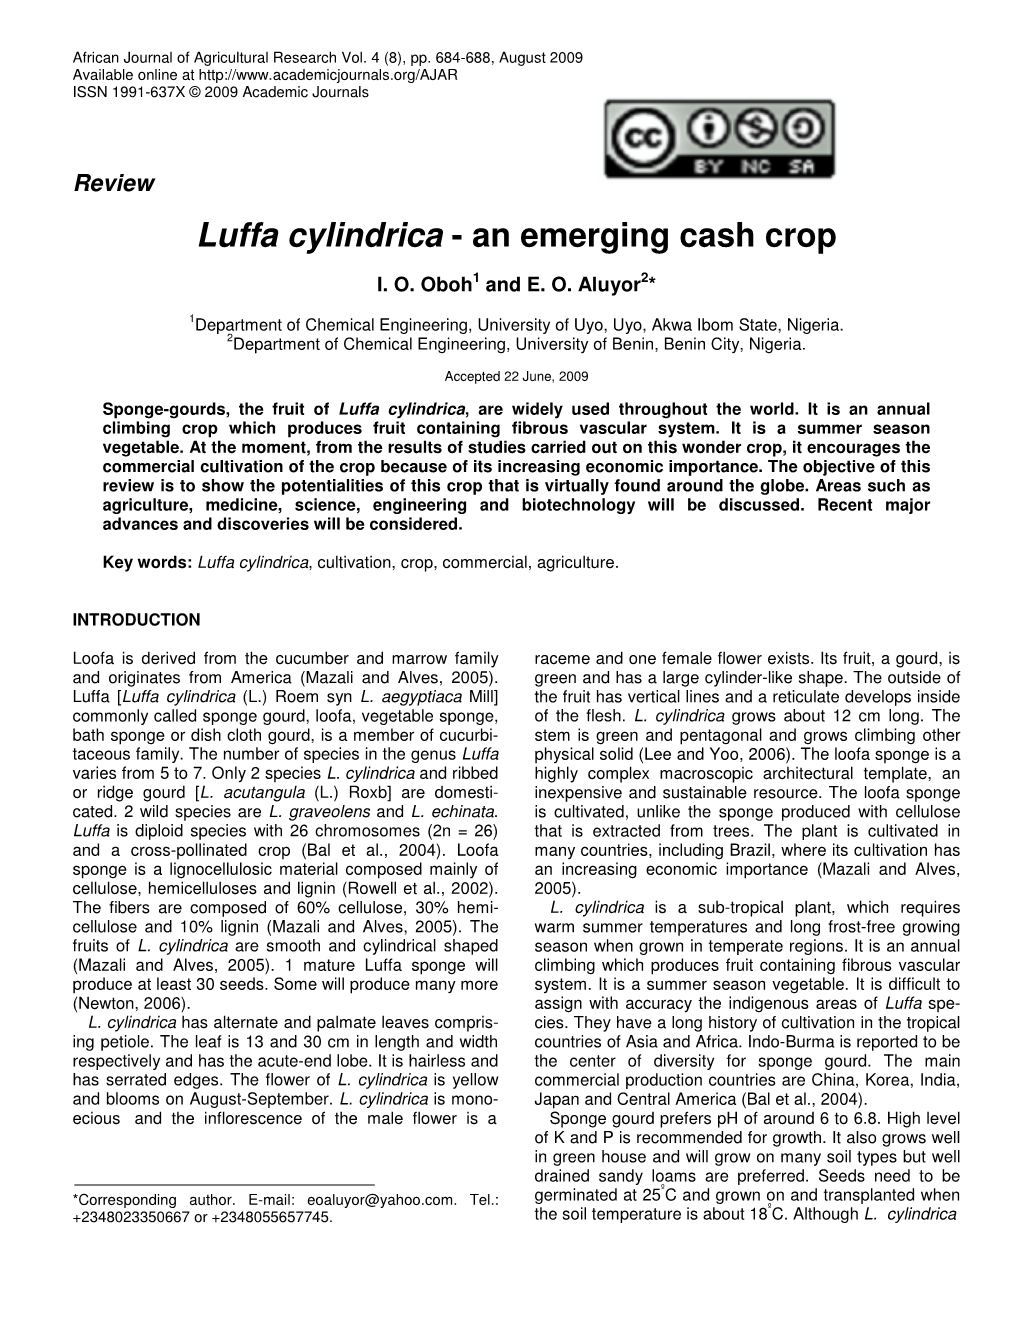 Luffa Cylindrica - an Emerging Cash Crop